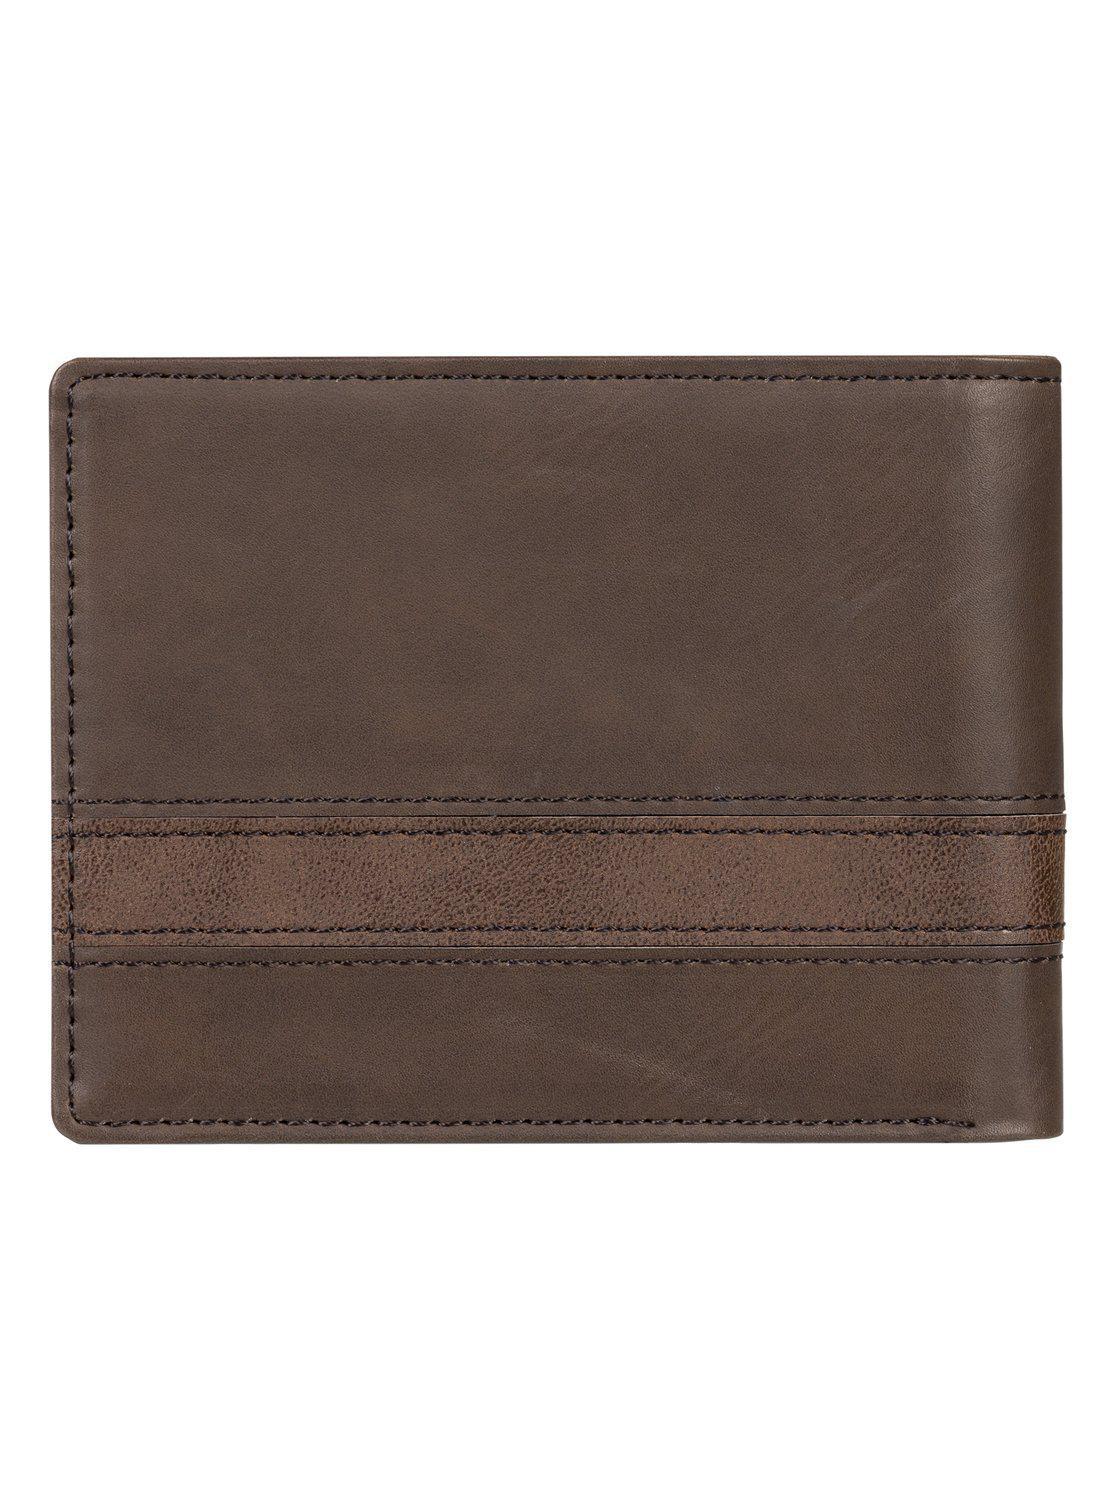 Supply Slim Bi-Fold Wallet Chocolate Brown